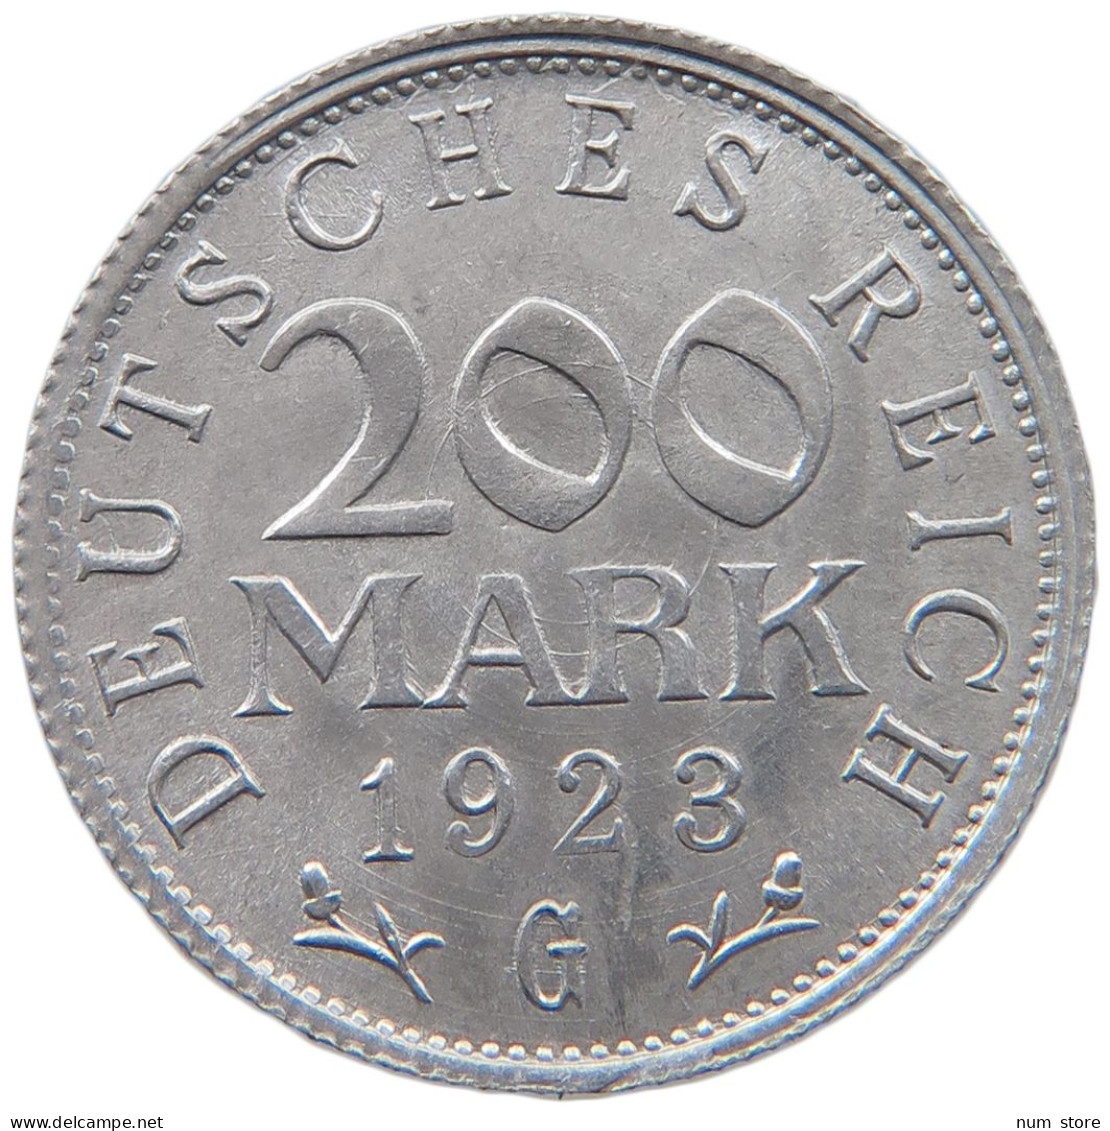 WEIMARER REPUBLIK 200 MARK 1923 G  #MA 098782 - 200 & 500 Mark